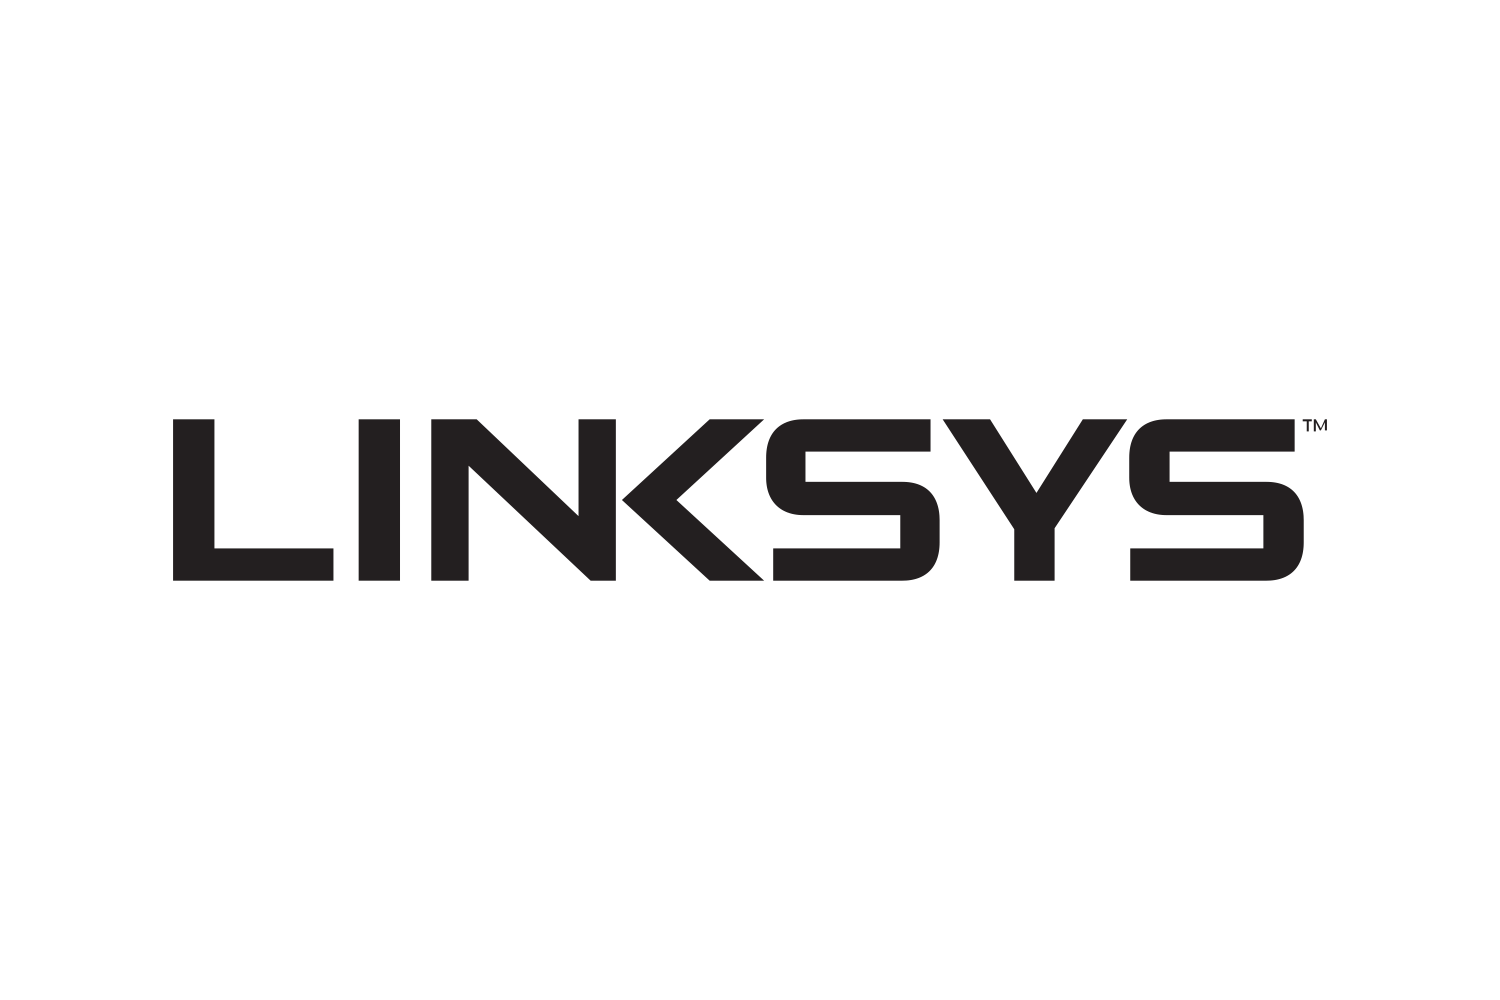 LINKSYS Linksys_logo.png